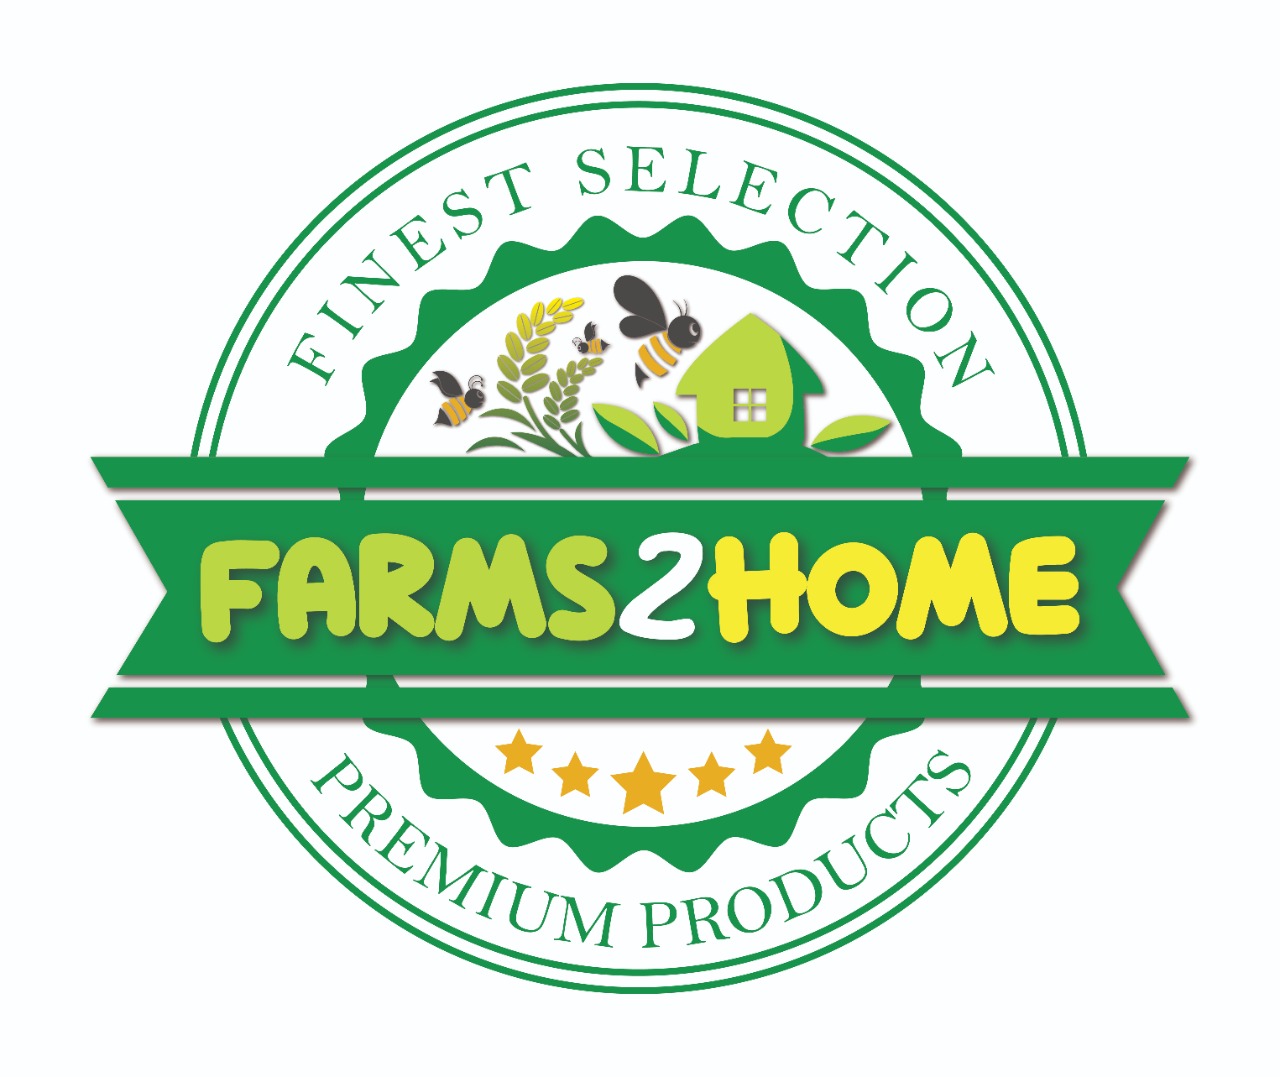 Farms2home